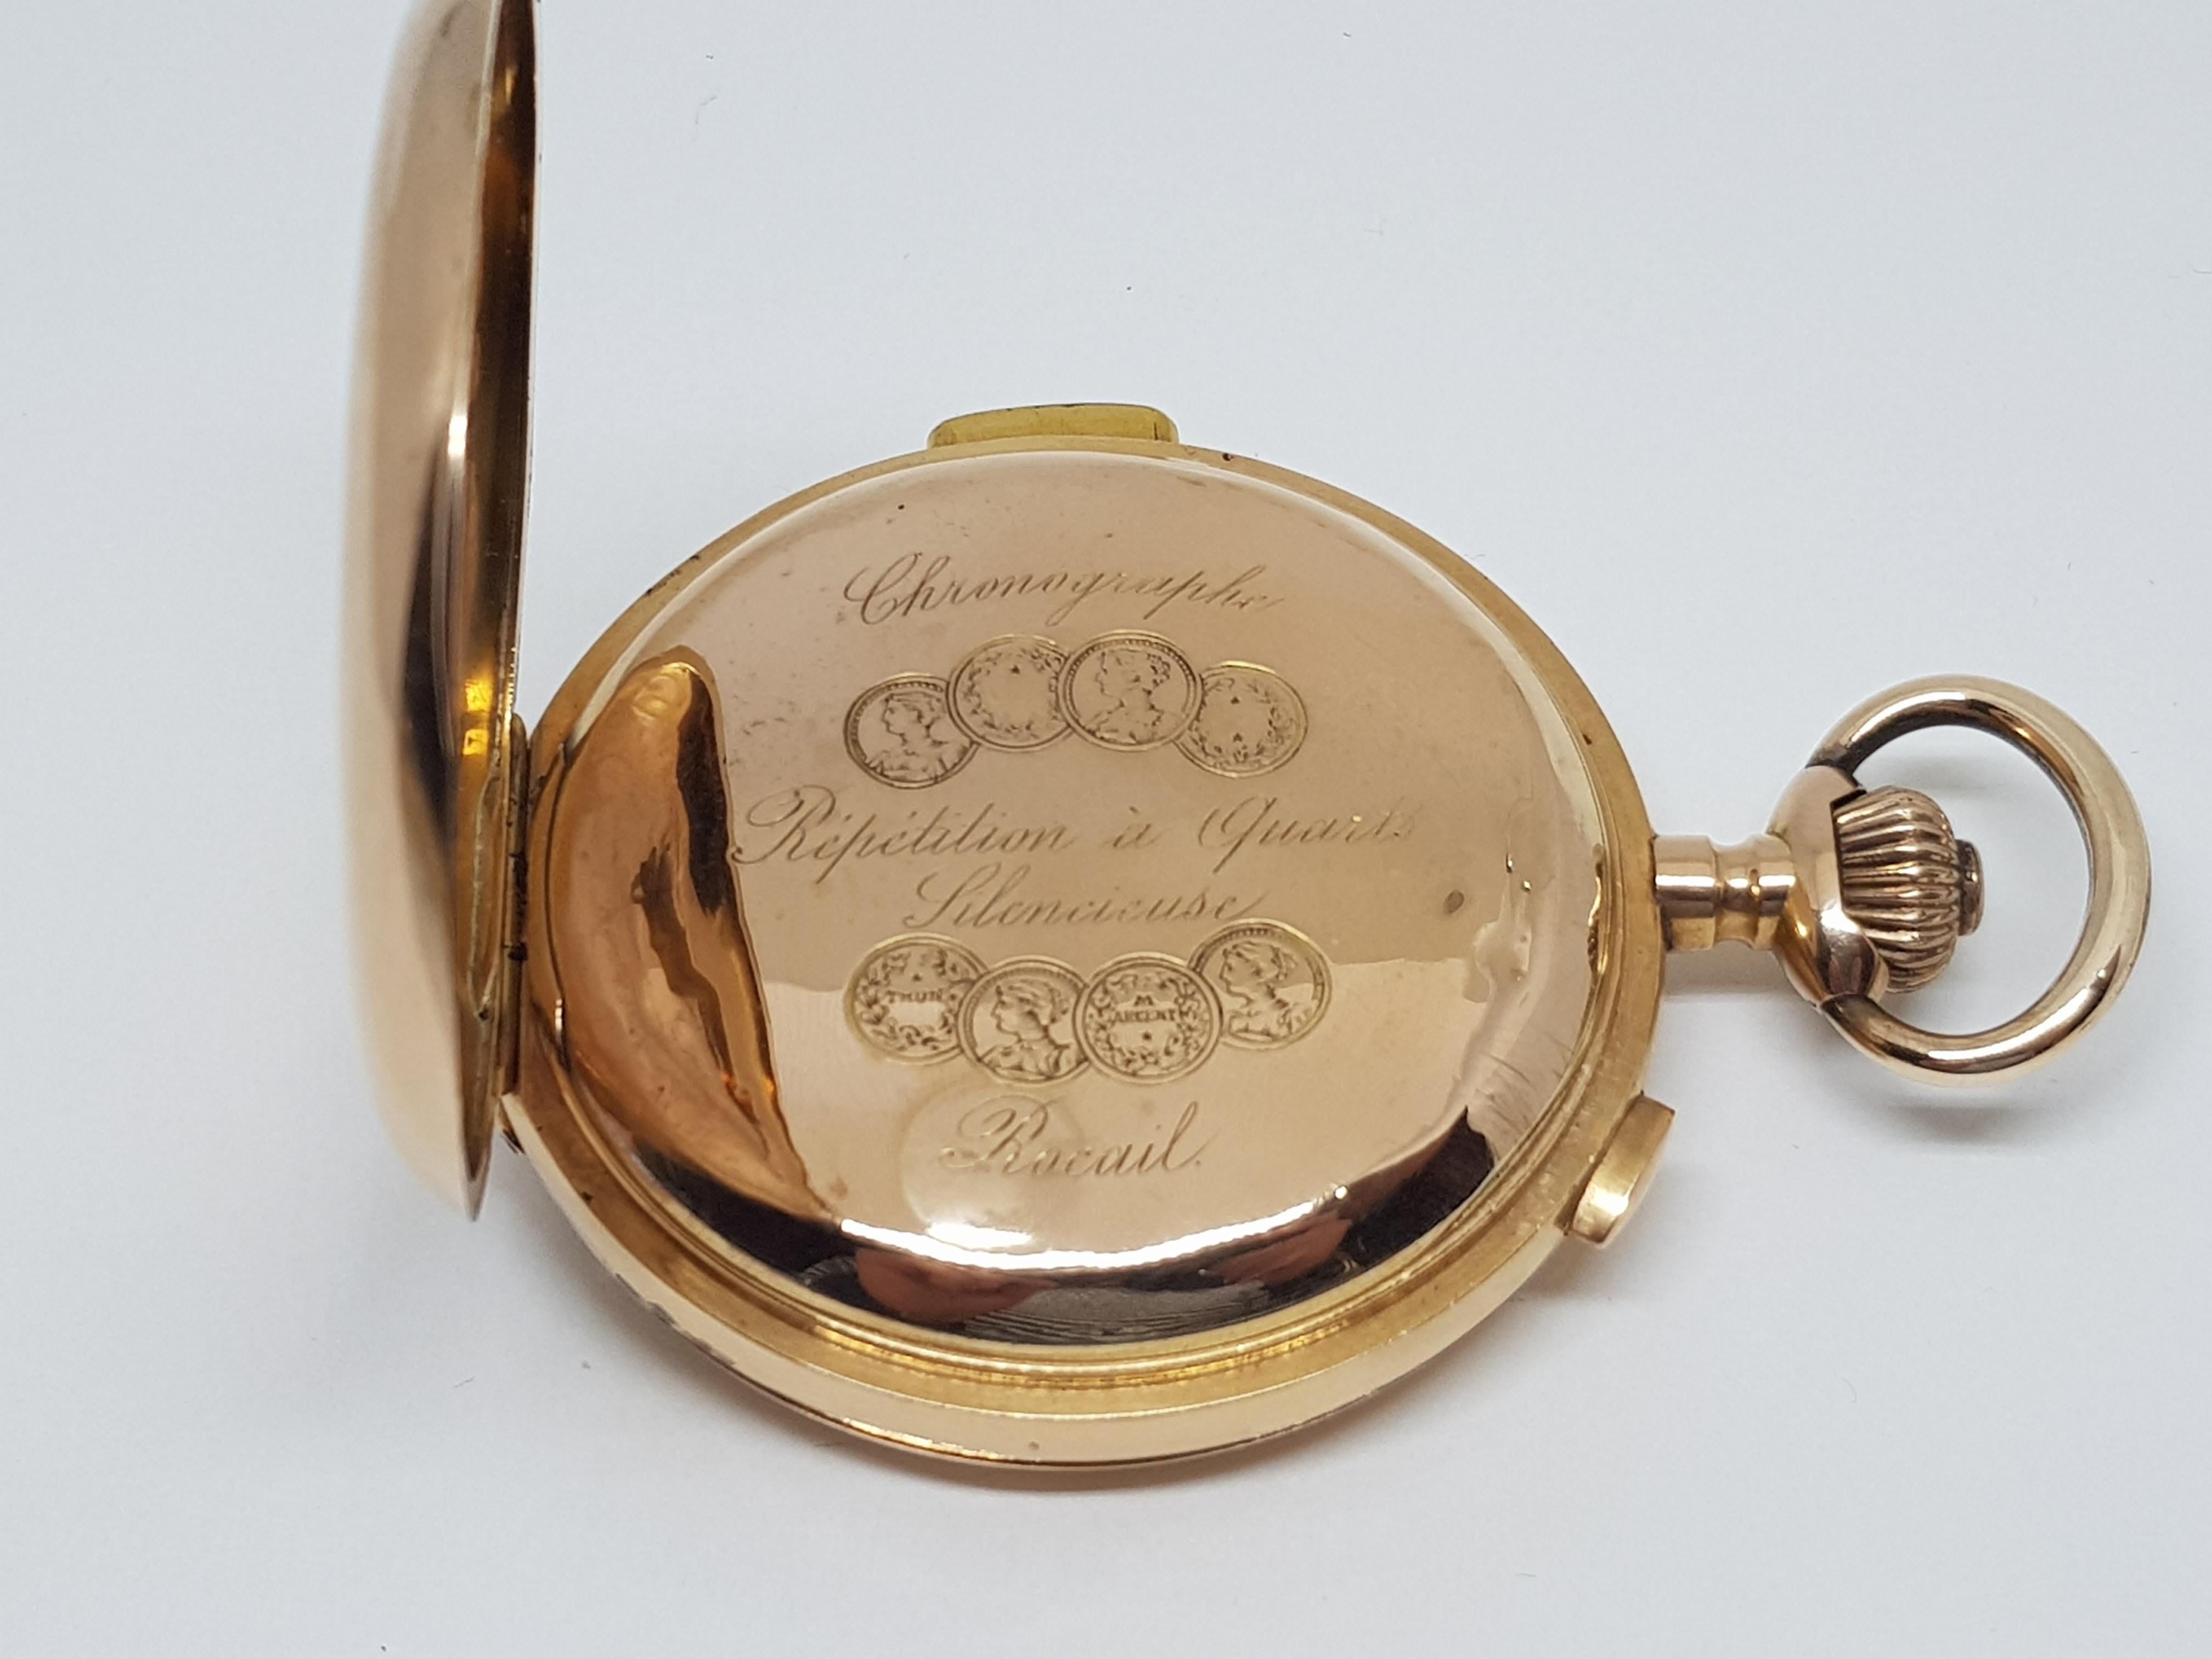 Men's Chronographe Repetition a Quartz Silencieus Rocail Musical Gold Pocket Watch